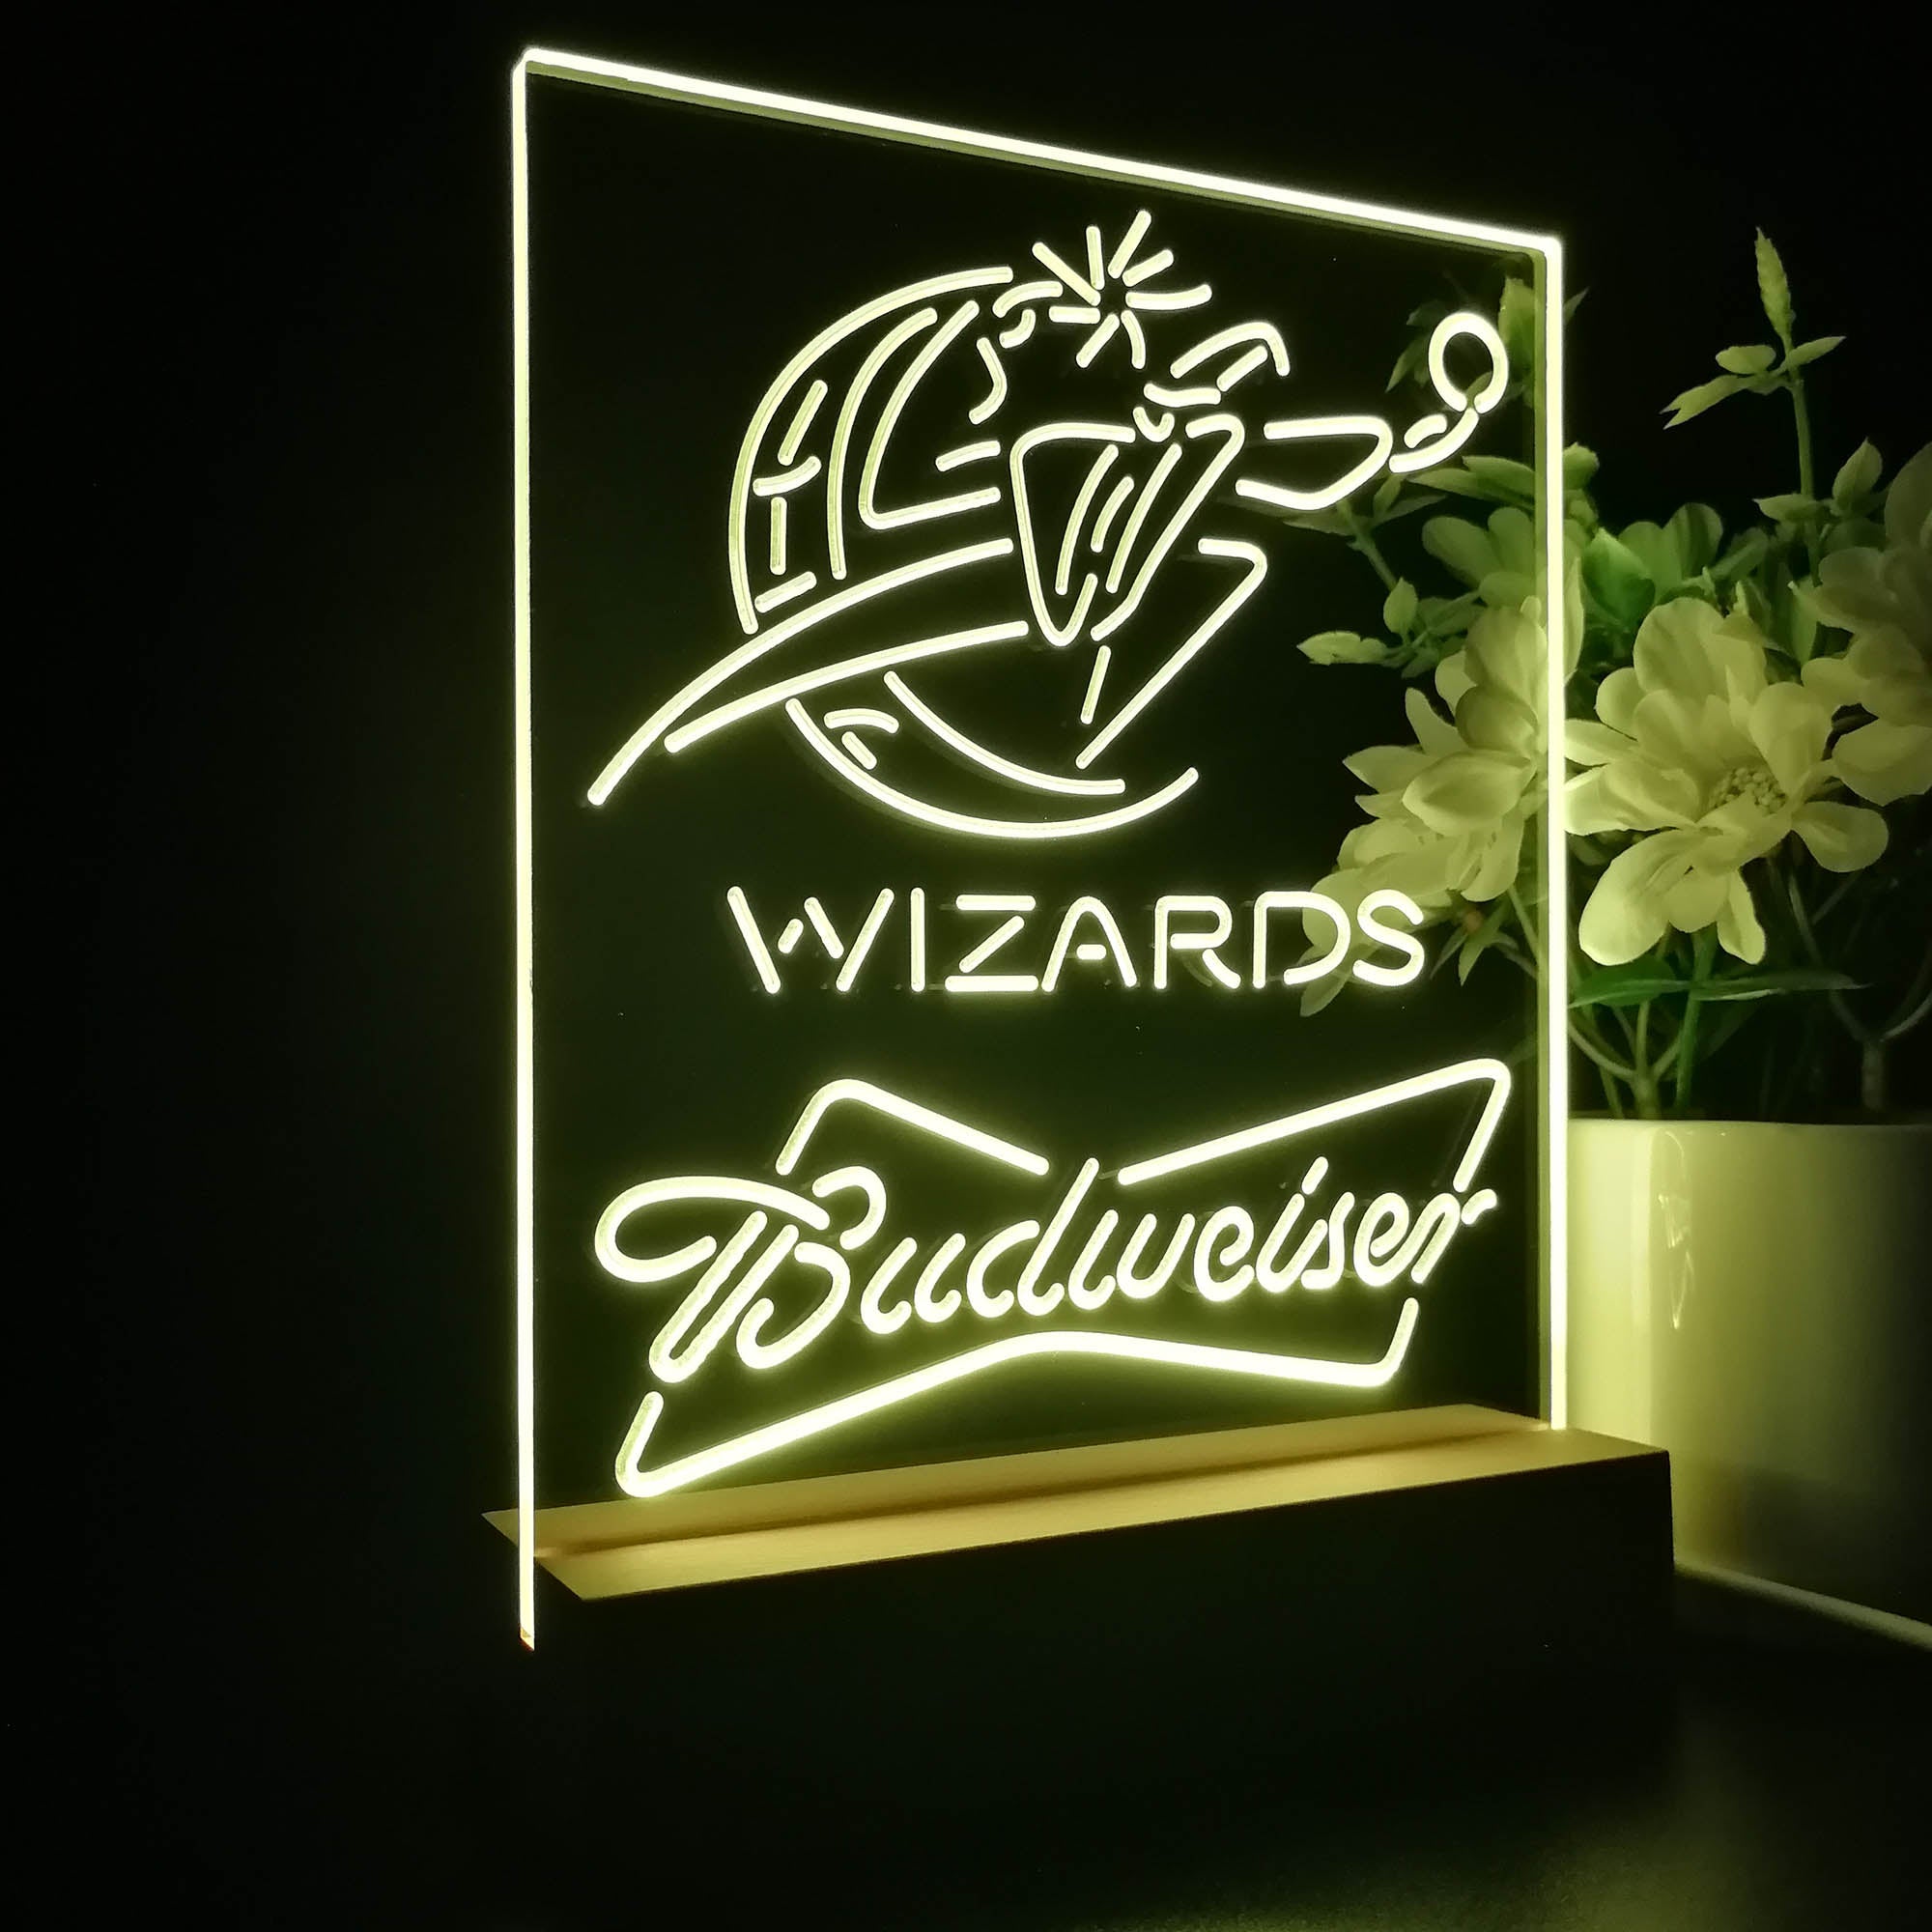 Washington Wizards Budweiser 3D LED Optical Illusion Sport Team Night Light